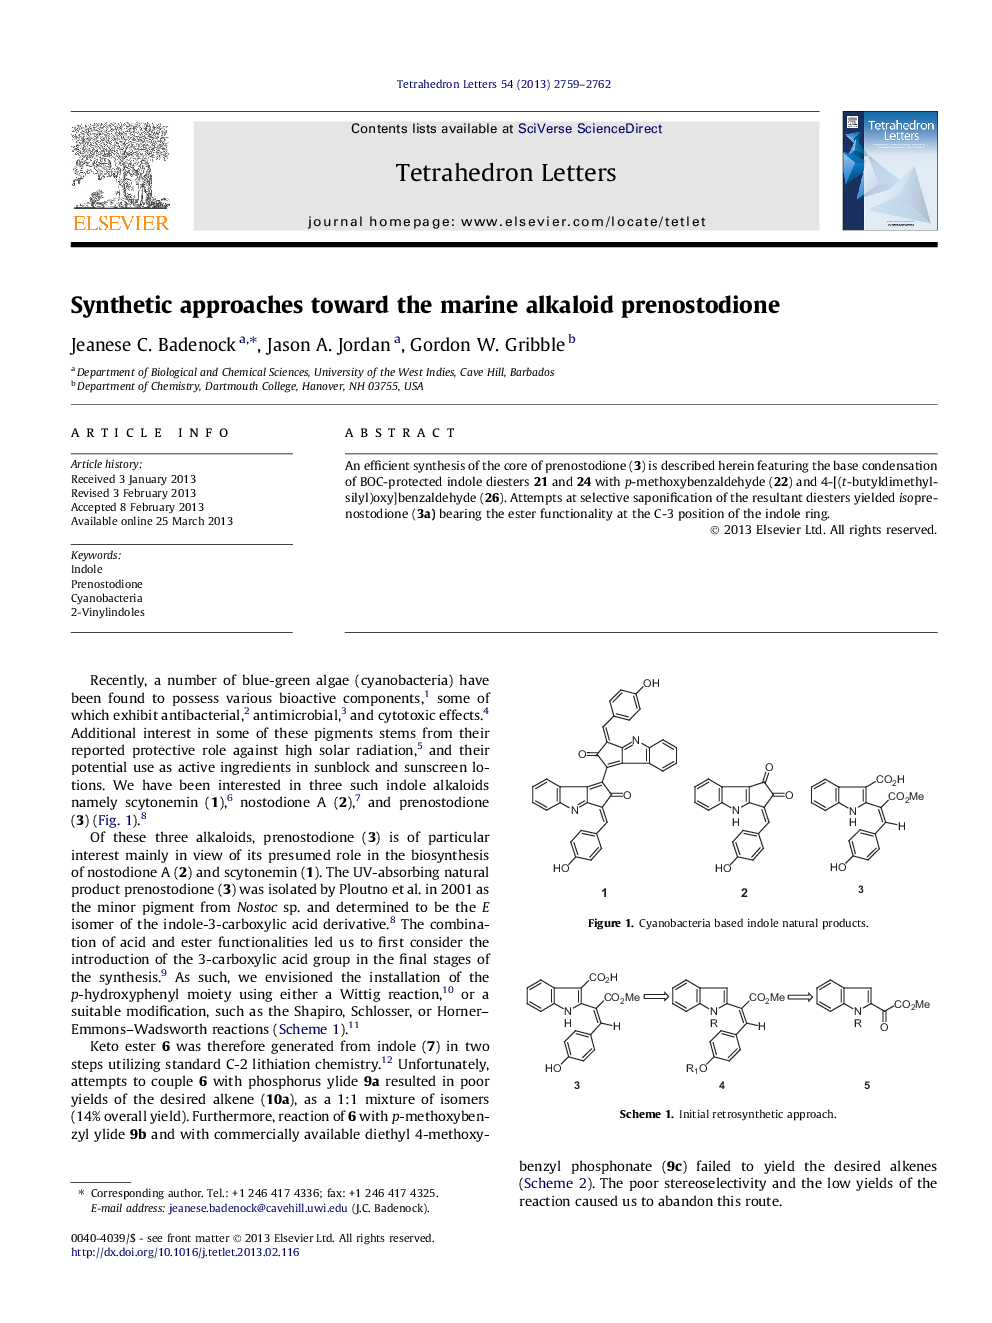 Synthetic approaches toward the marine alkaloid prenostodione